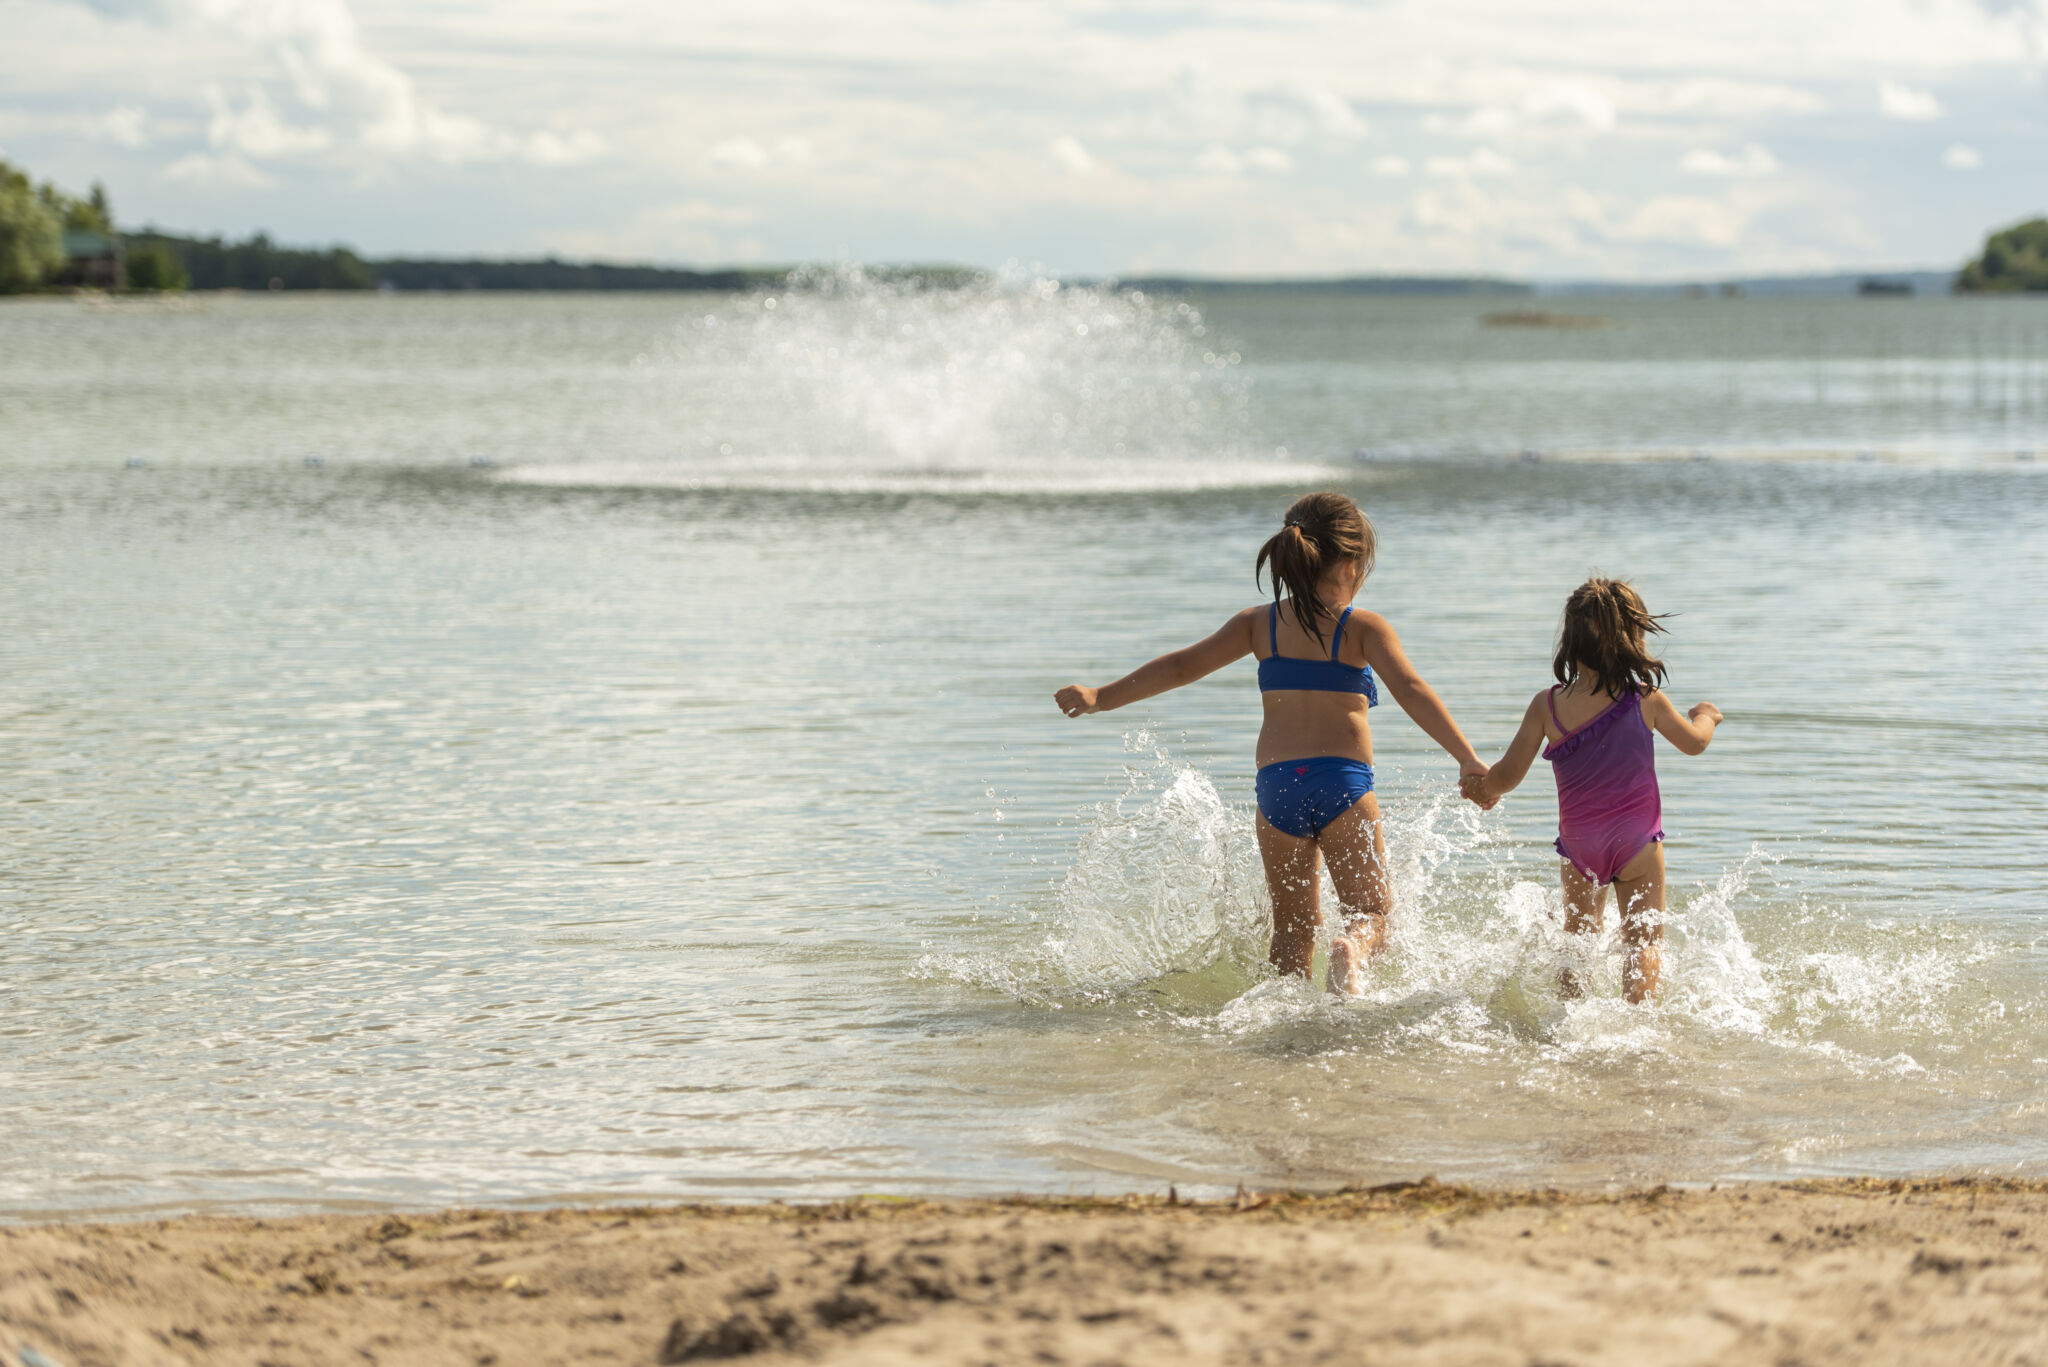 Kids enjoying warm waters at Severn beach